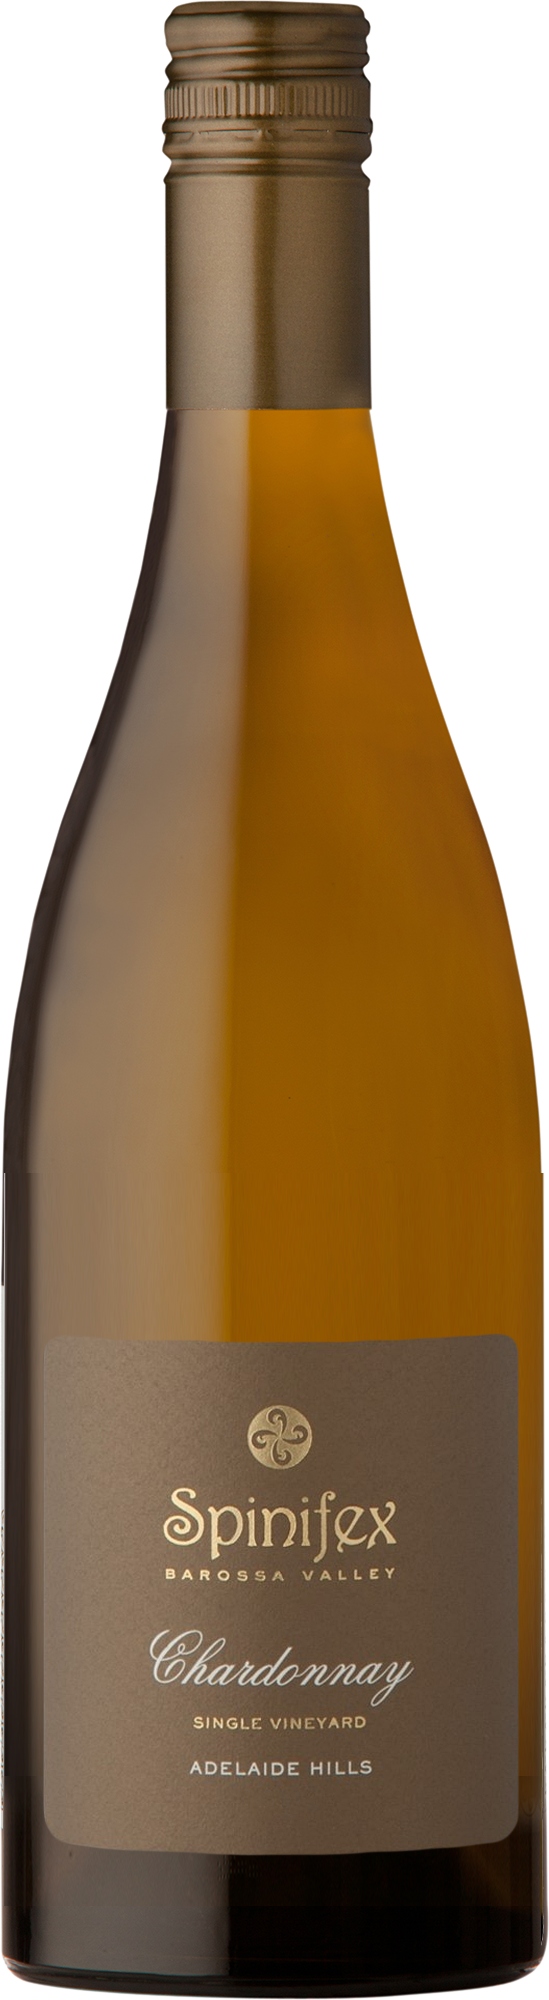 Spinifex Chardonnay 2021